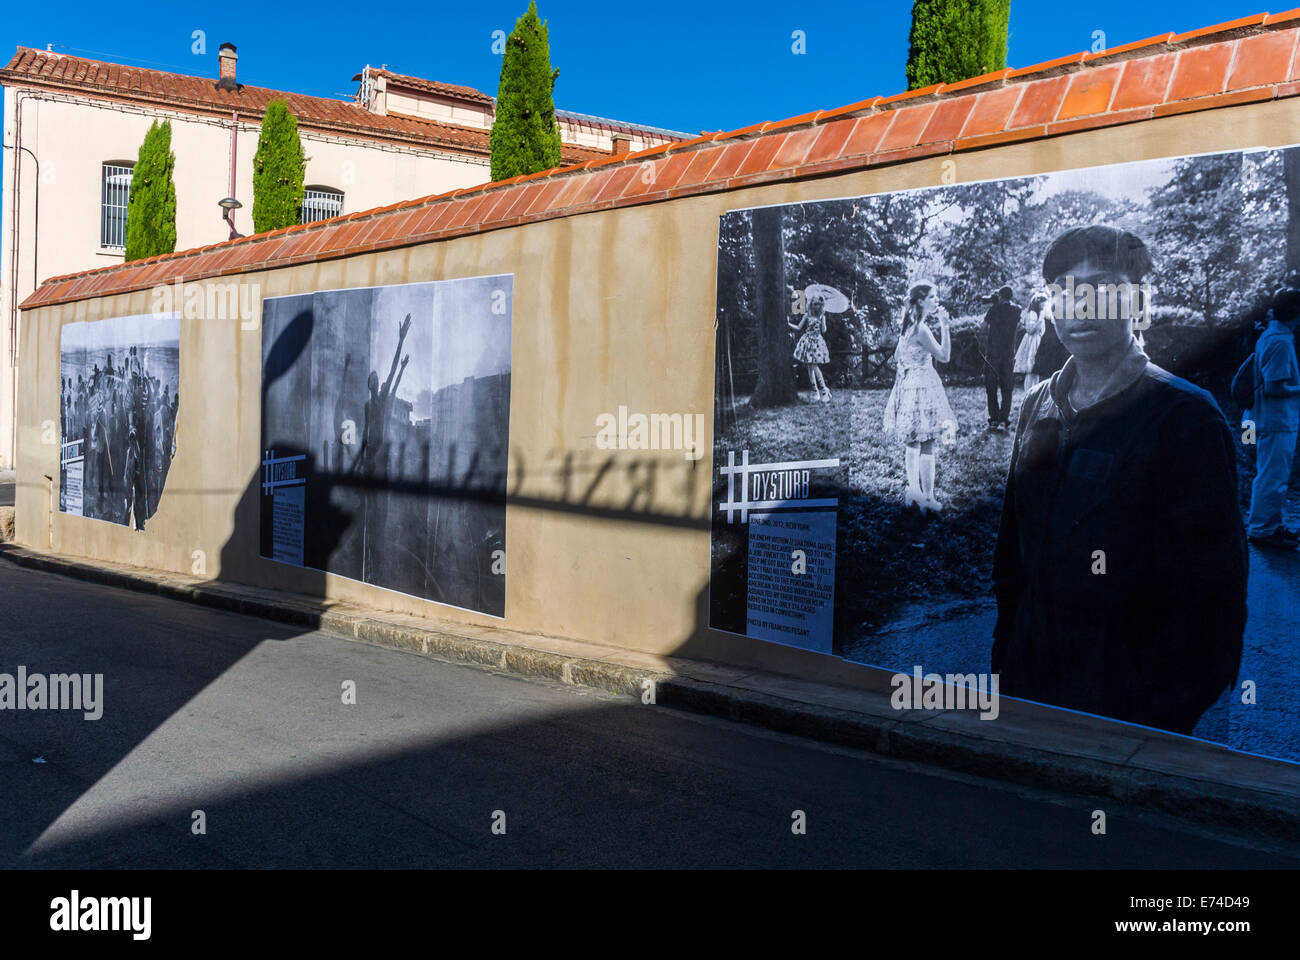 Perpignan, Francia, 'Visa pour l'Image' Photojournalism Festival Galleria fotografica Mostra, Outdoor on City Walls, Posters di strada Foto Stock